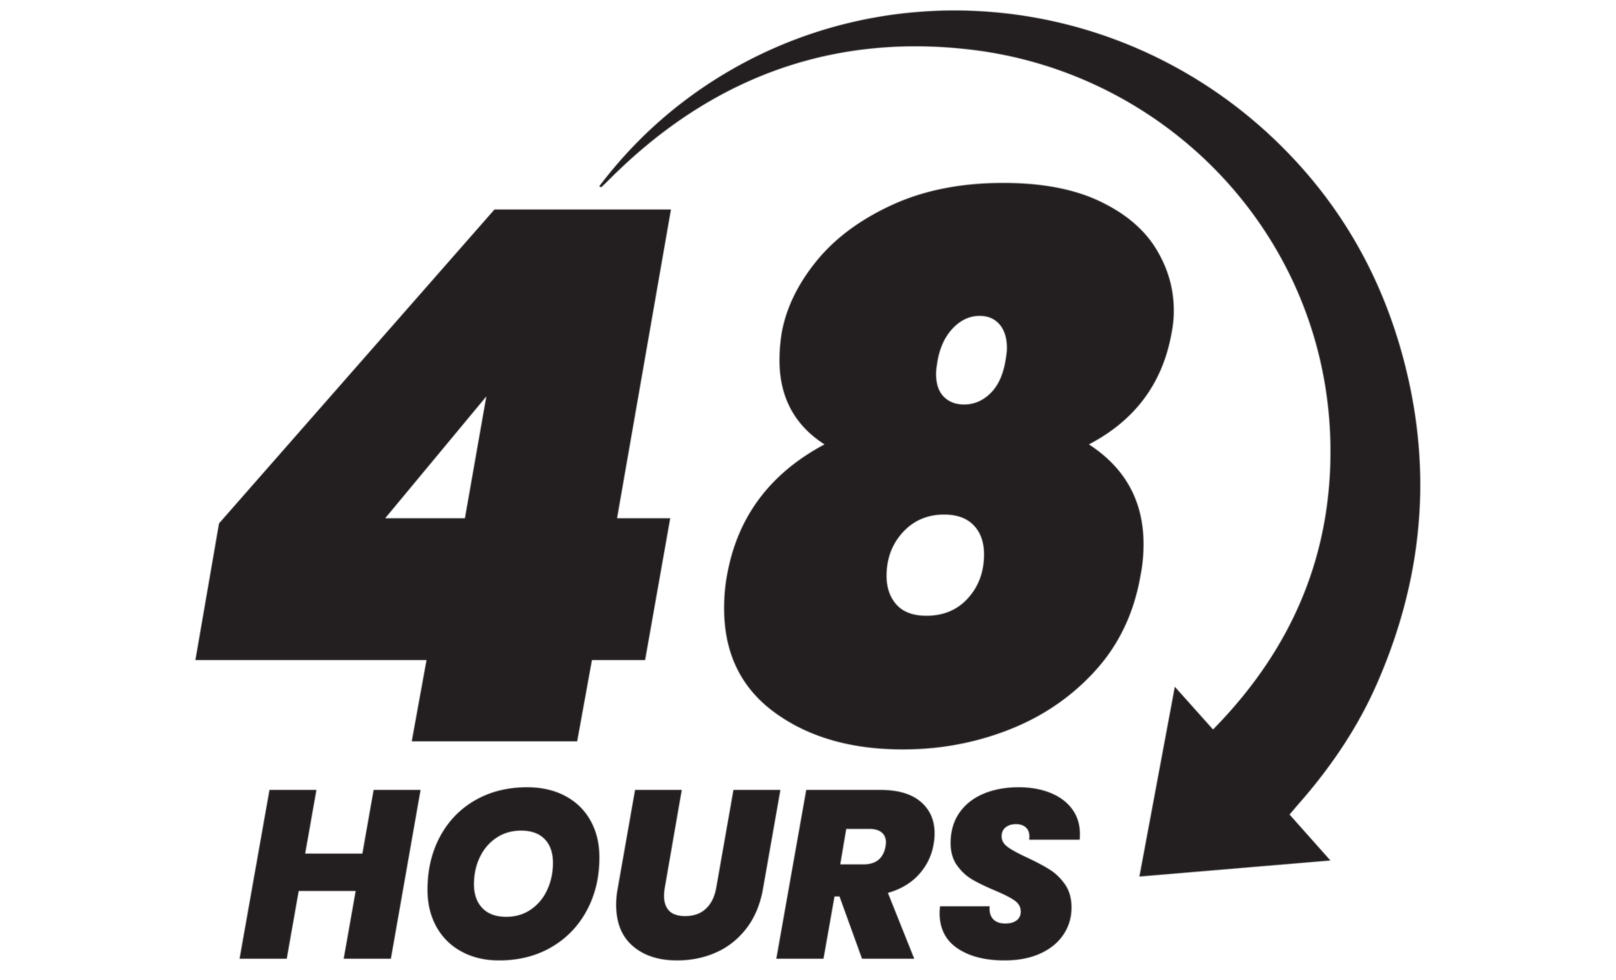 72 Hours logo on transparent background png